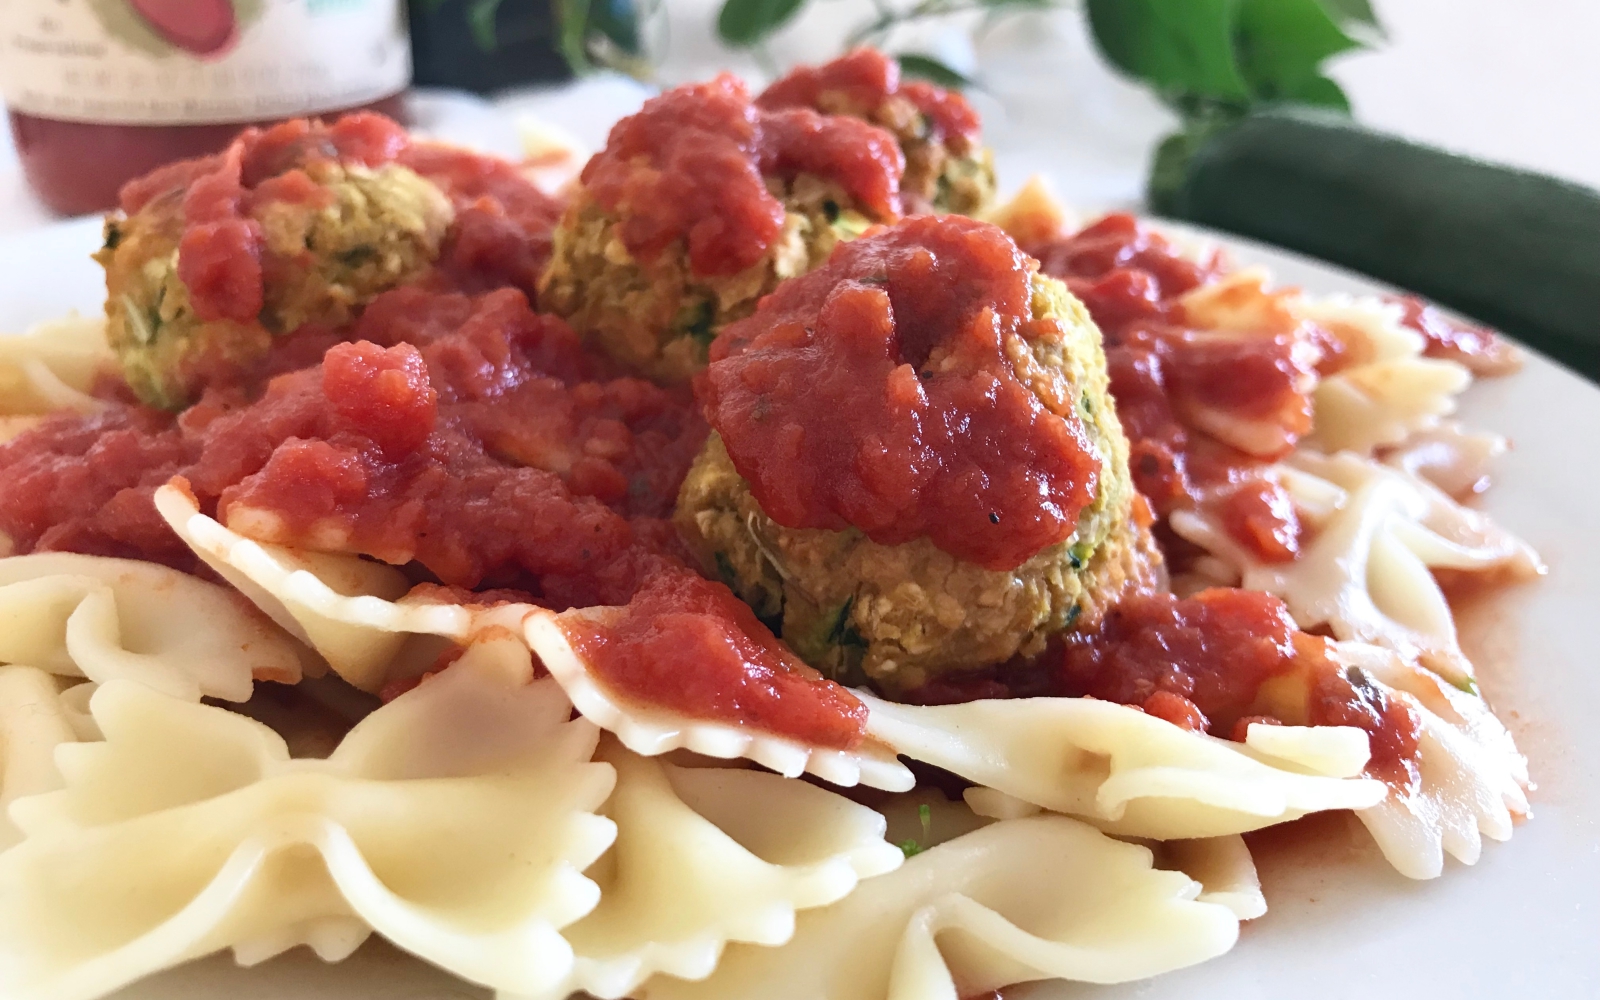 Zucchini-Chickpea ‘Meatballs’ With Marinara and Pasta